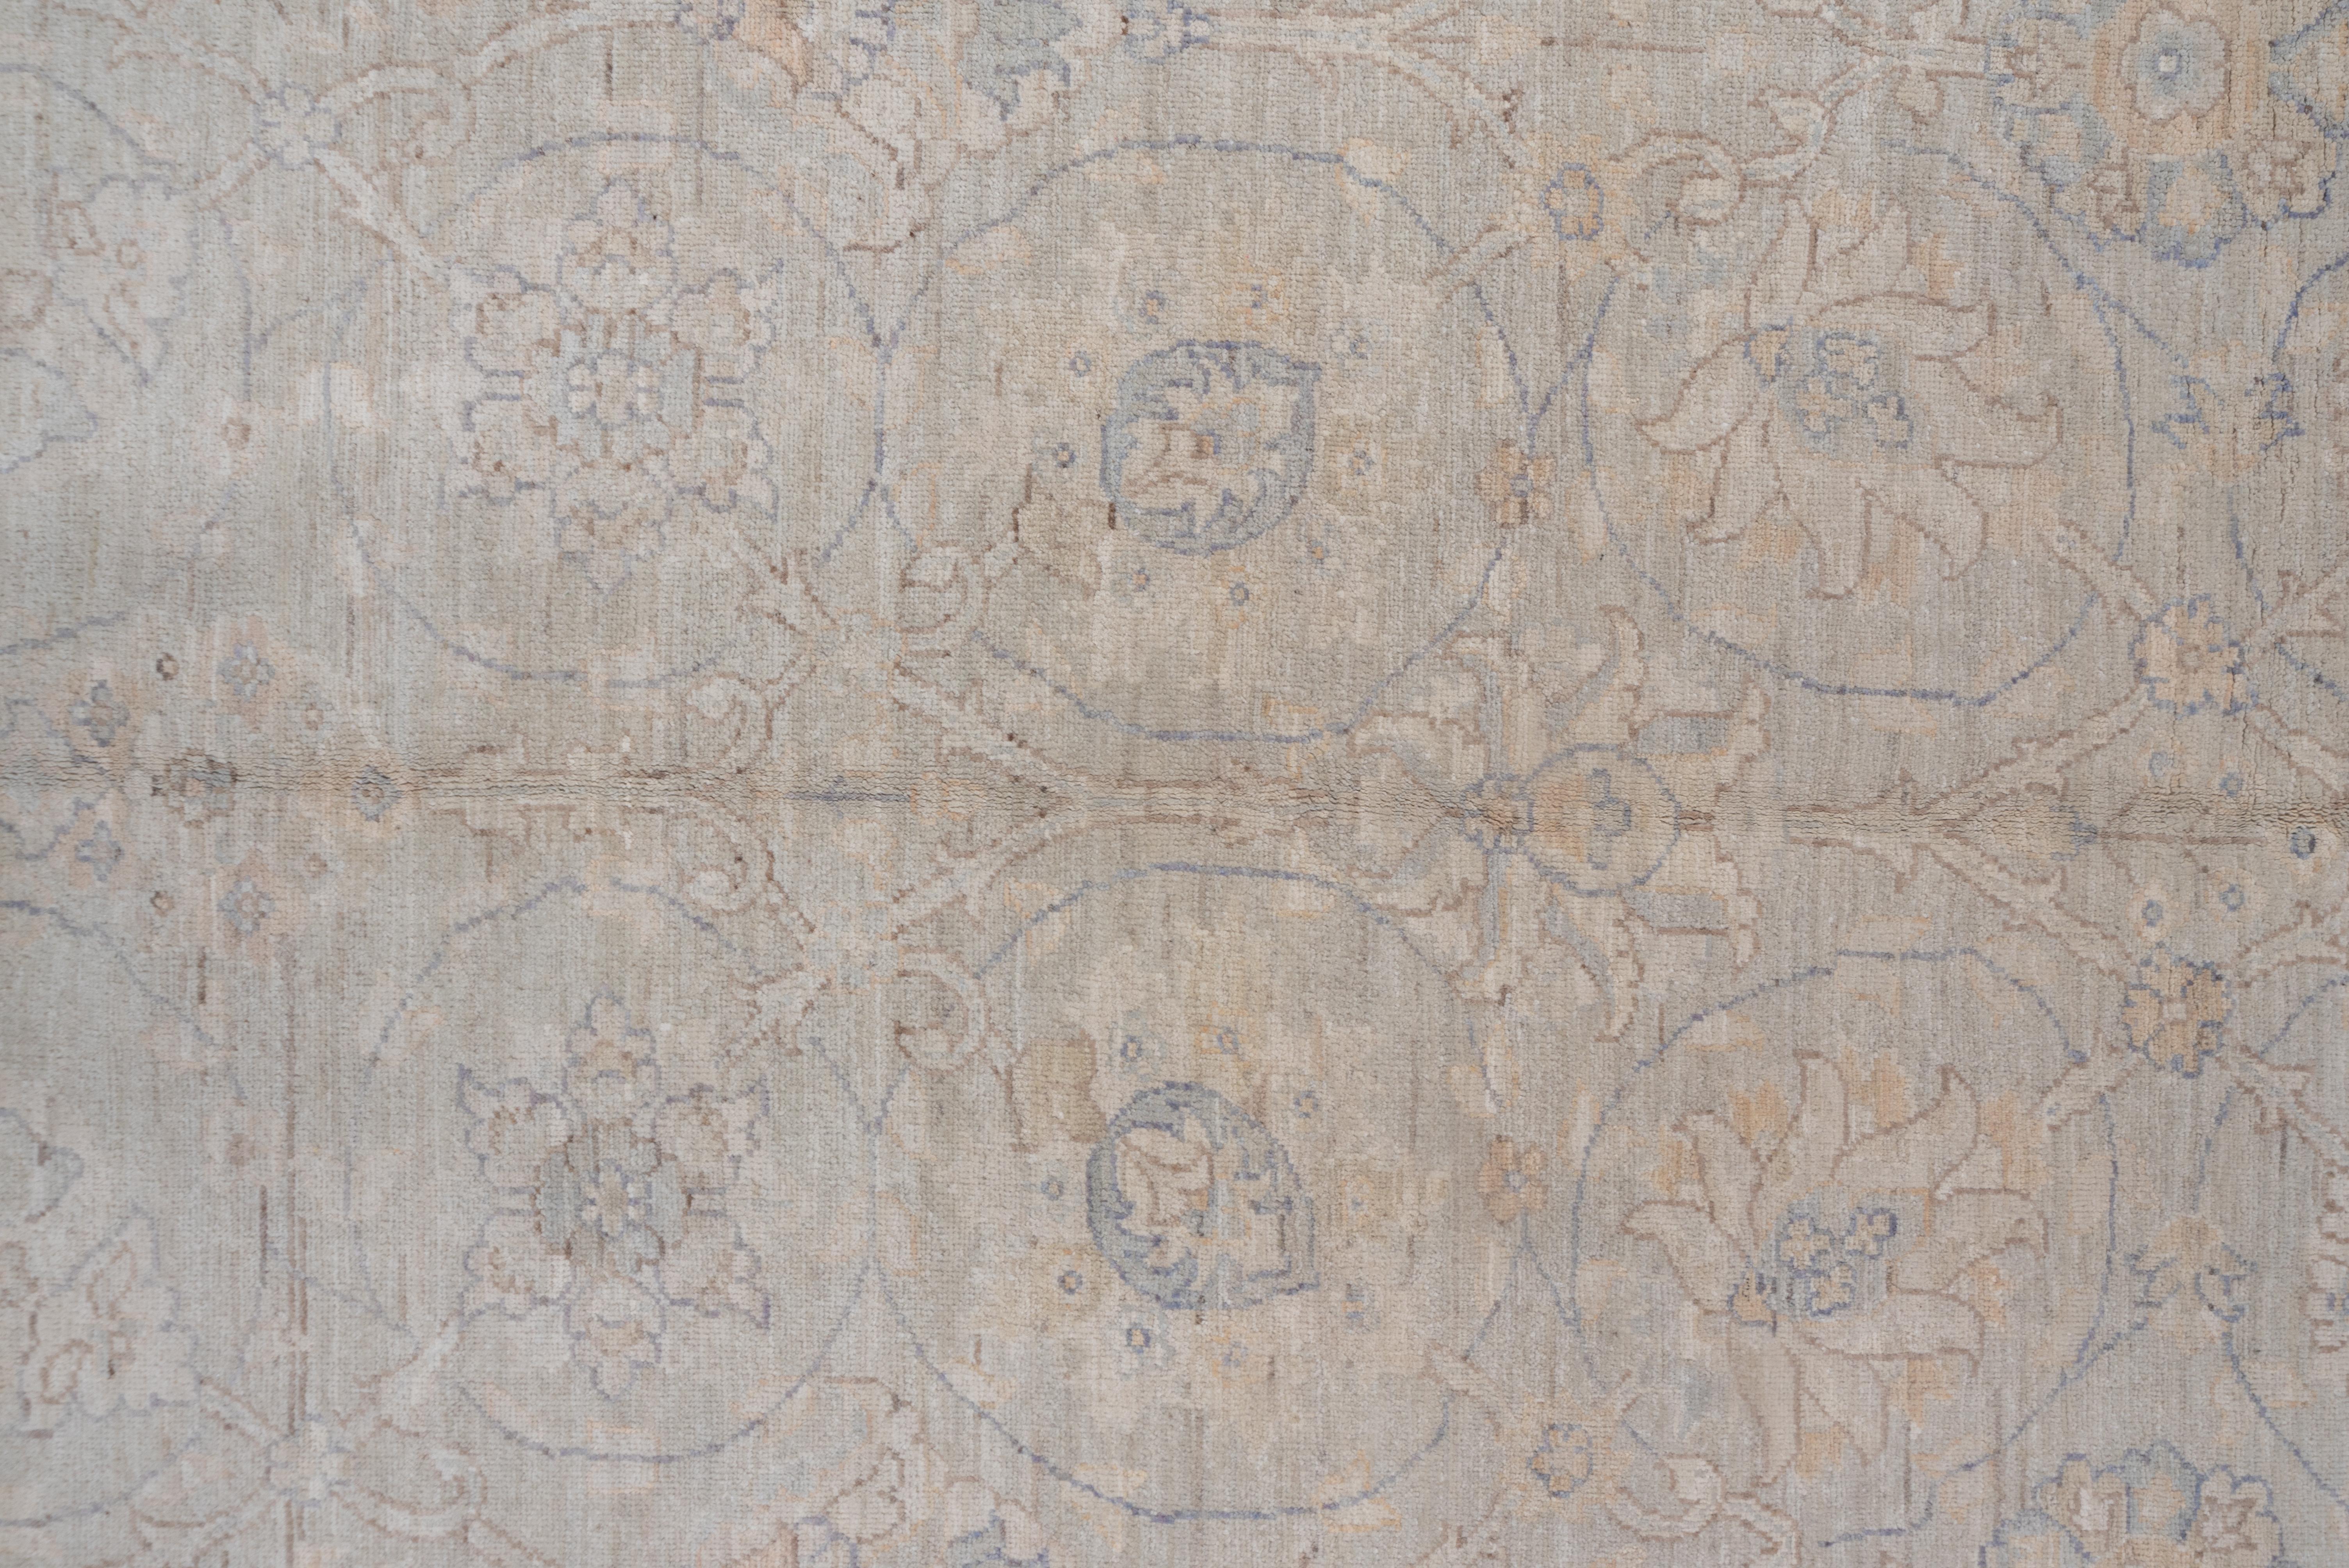 Hand-Knotted Modern Afghan Carpet, Soft Palette